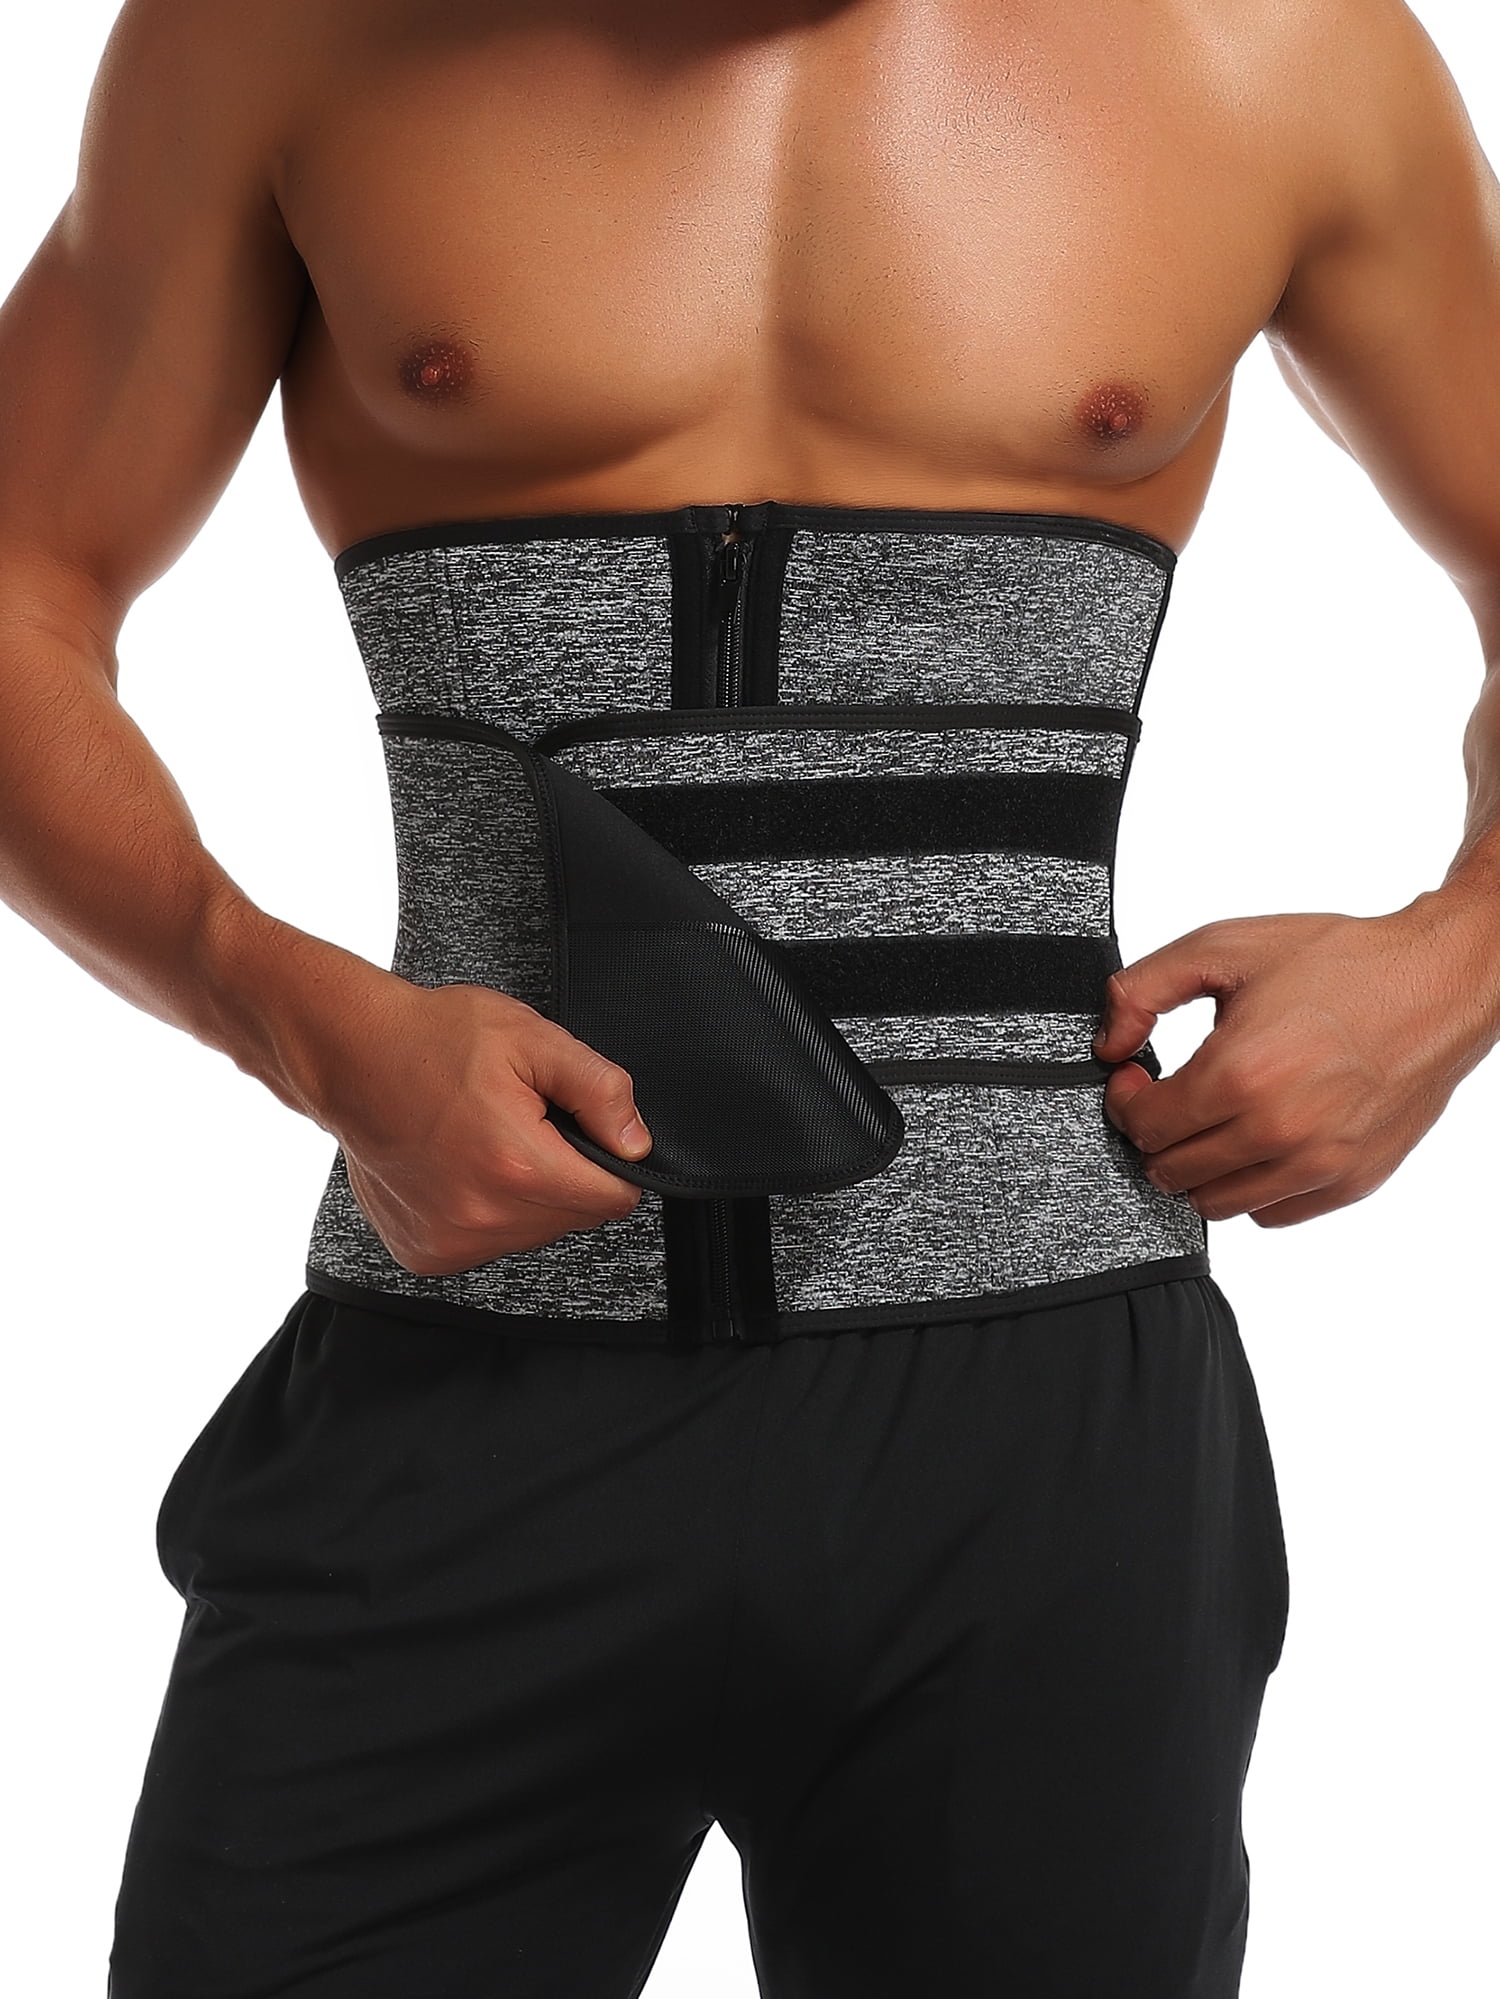 GainKee 100% Latex Men Waist Trainer Corsets With Steel Bone Sweat Belt Sauna Suit For Fitness Body Shaper 